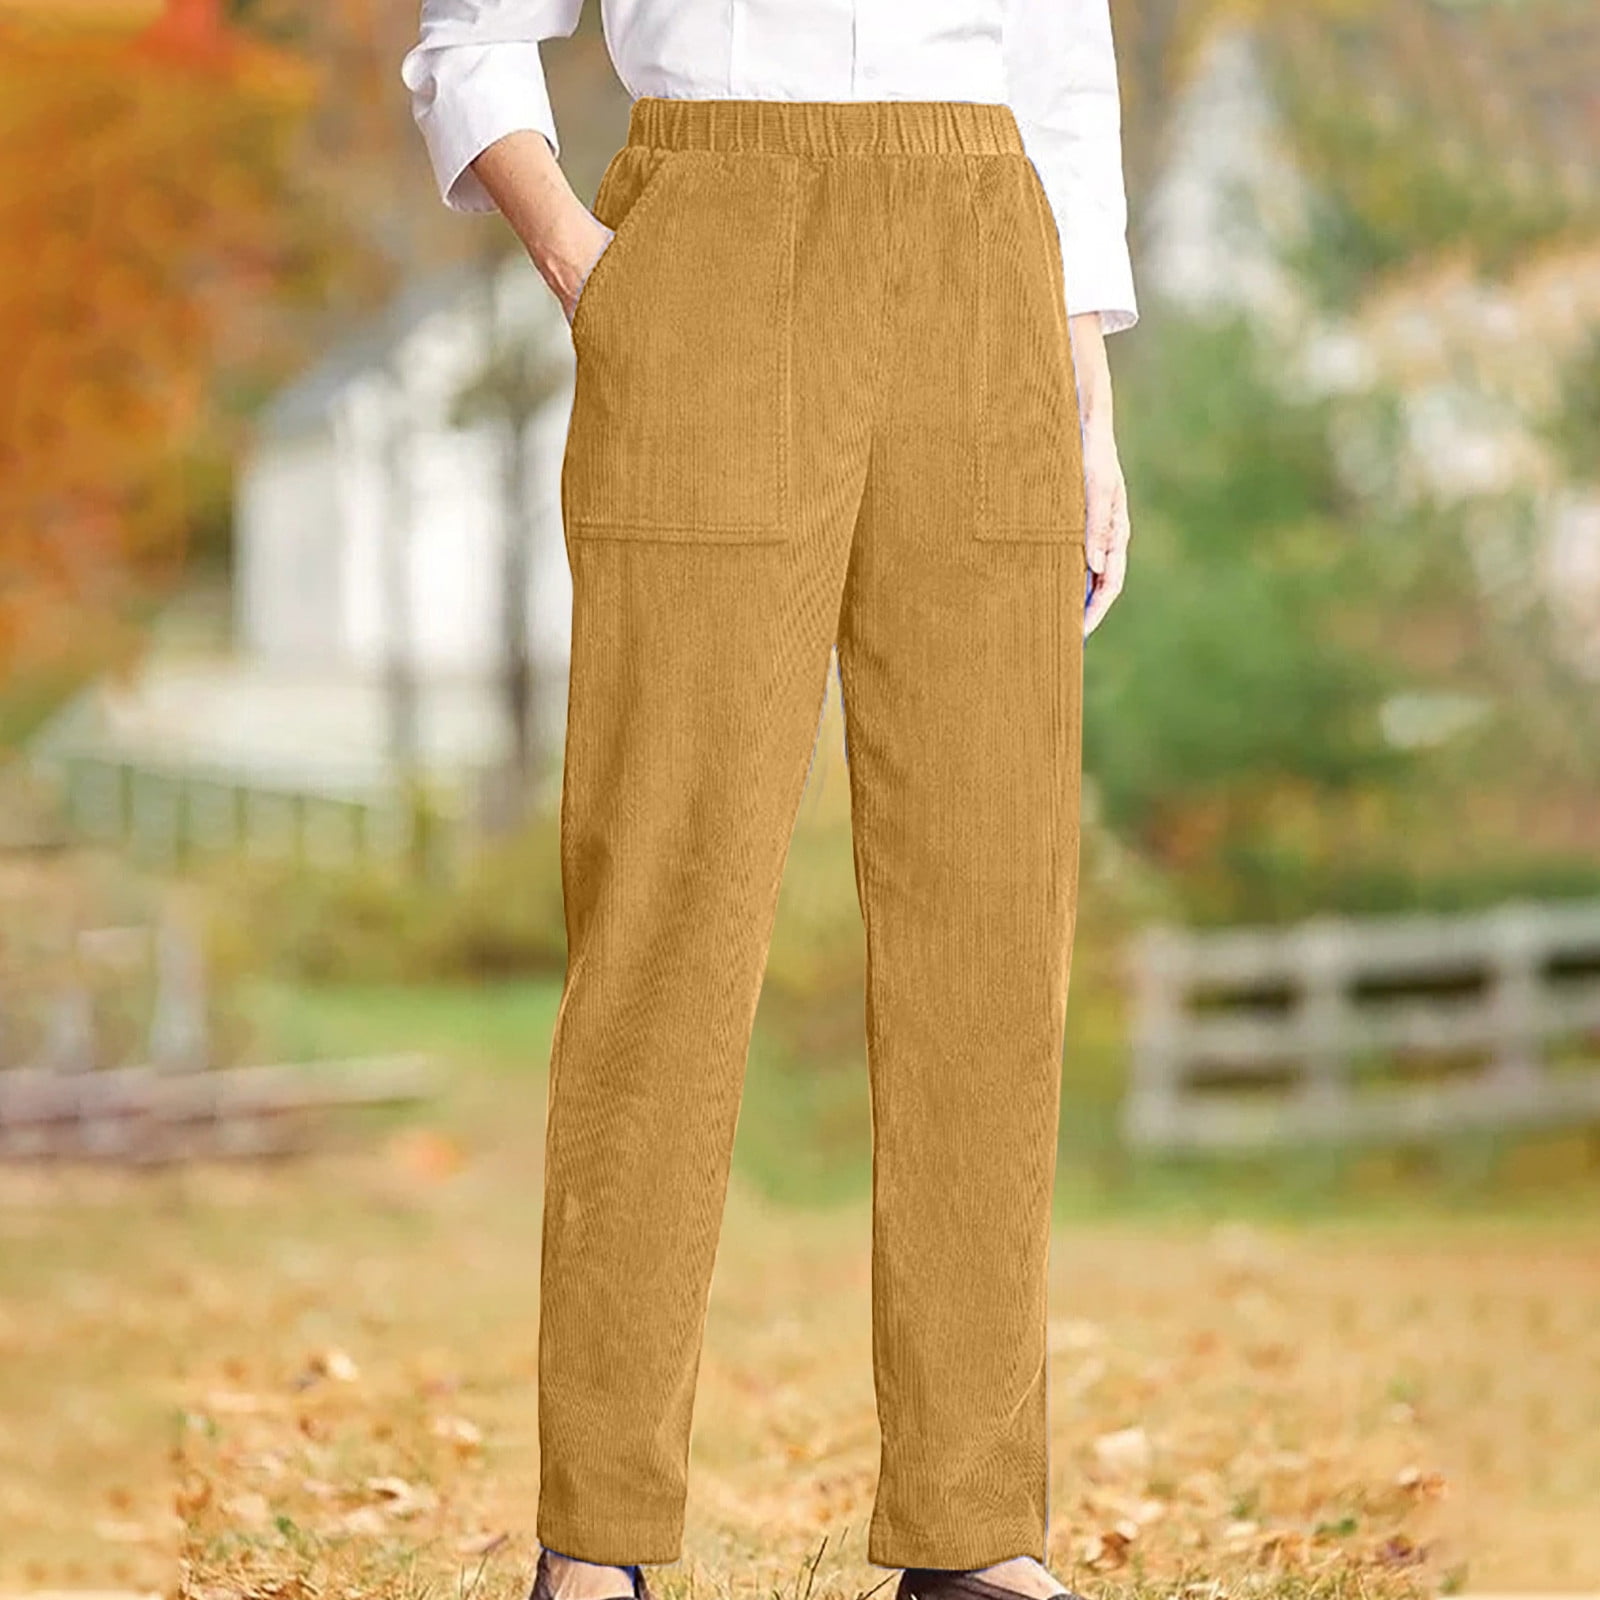 VSSSJ Women's Corduroy Pants Oversized Fit Solid Color Elastic